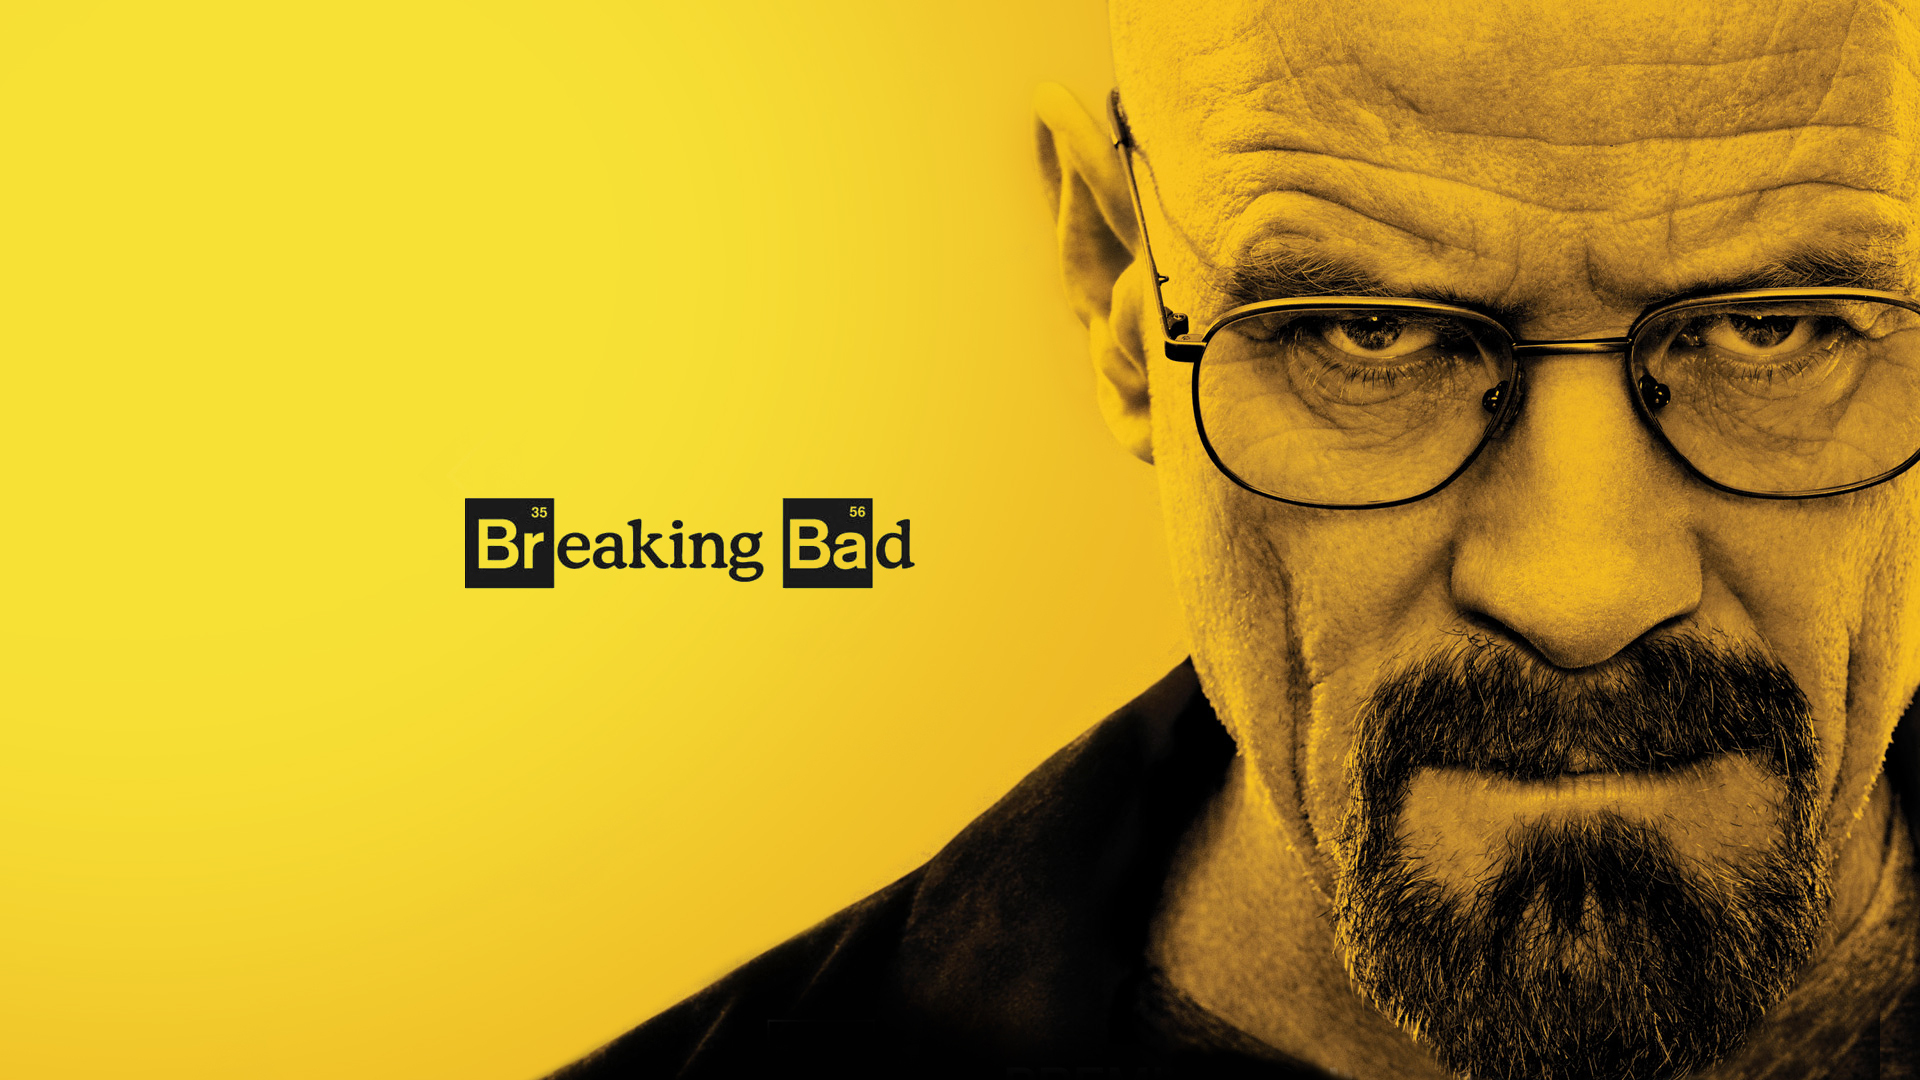 Breaking Bad, Walter White, Bryan Cranston, Yellow Background Wallpaper